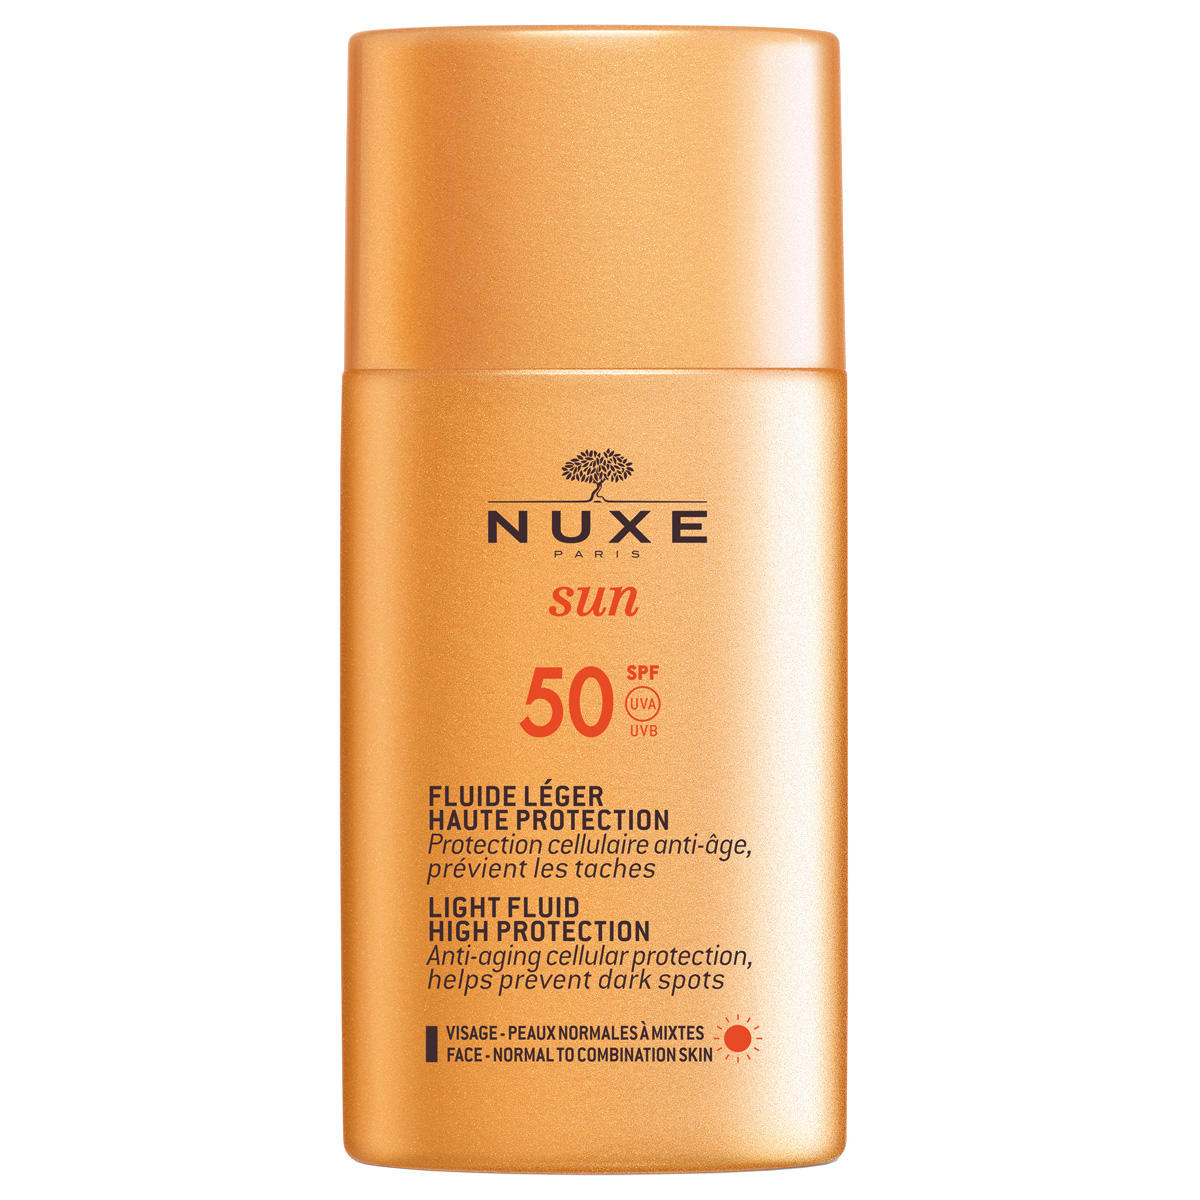 NUXE Sun Fluide léger haute protection SPF 50 50 ml - 1